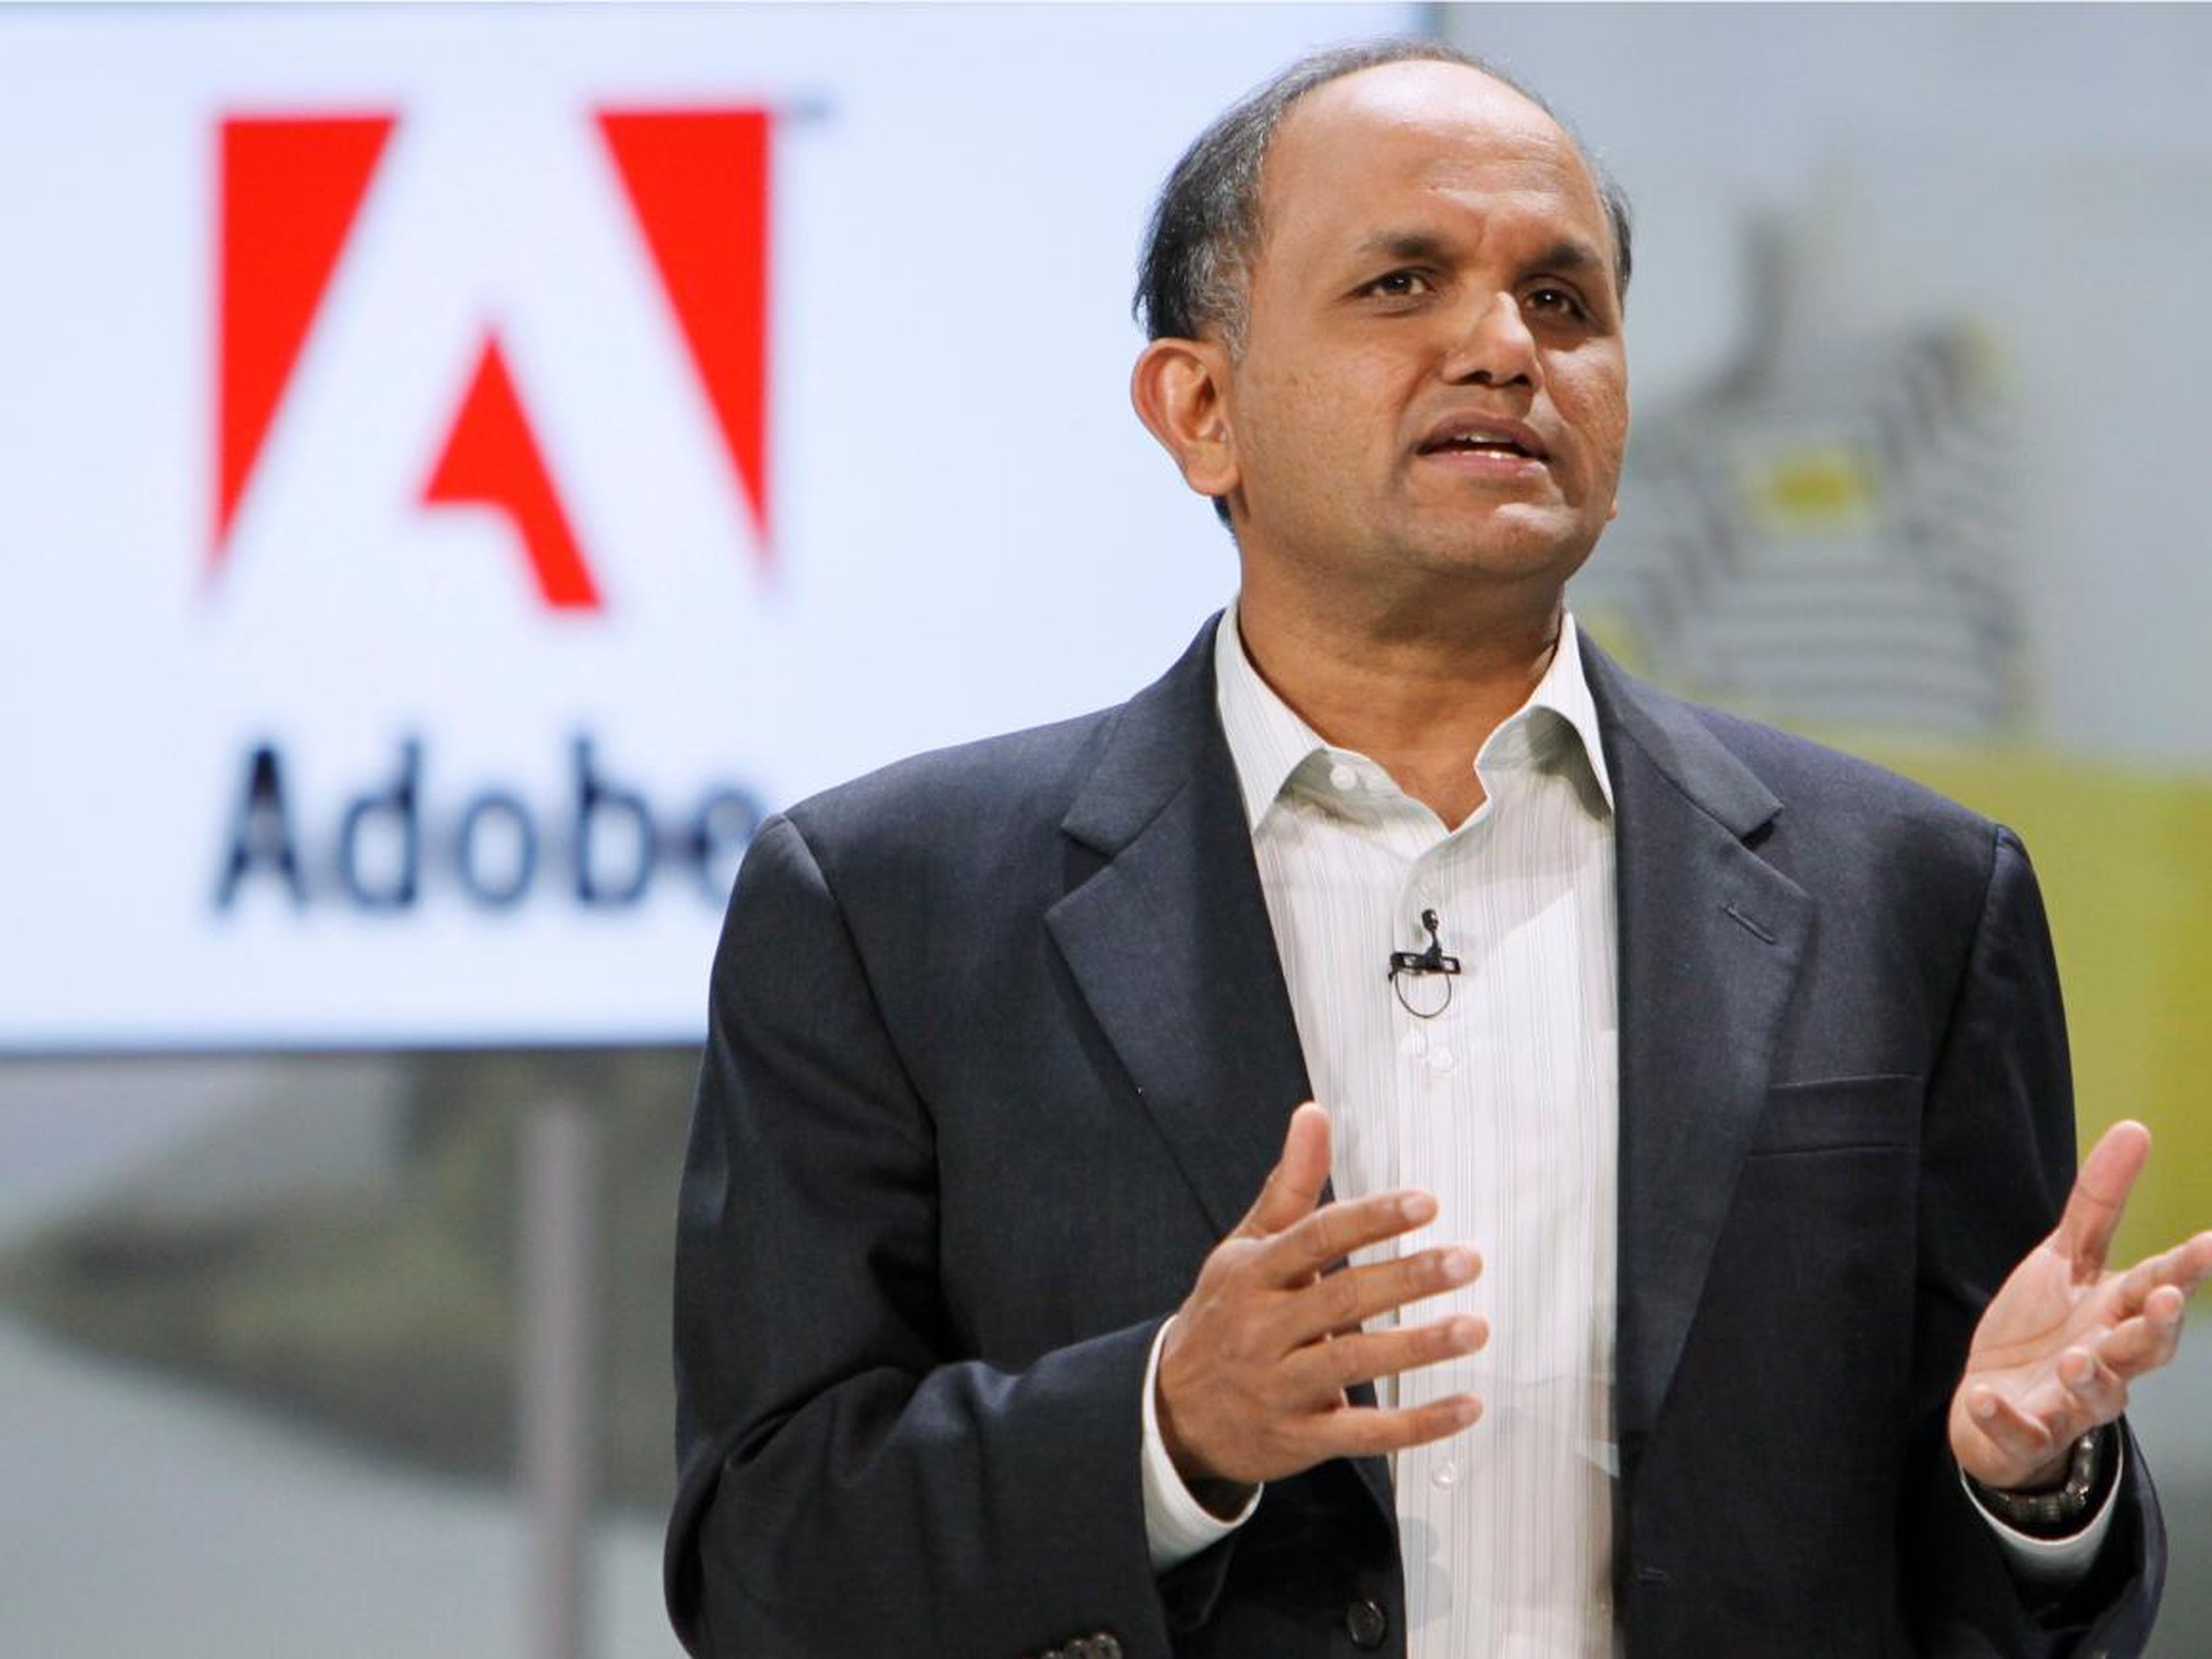 Adobe CEO Shantanu Narayen